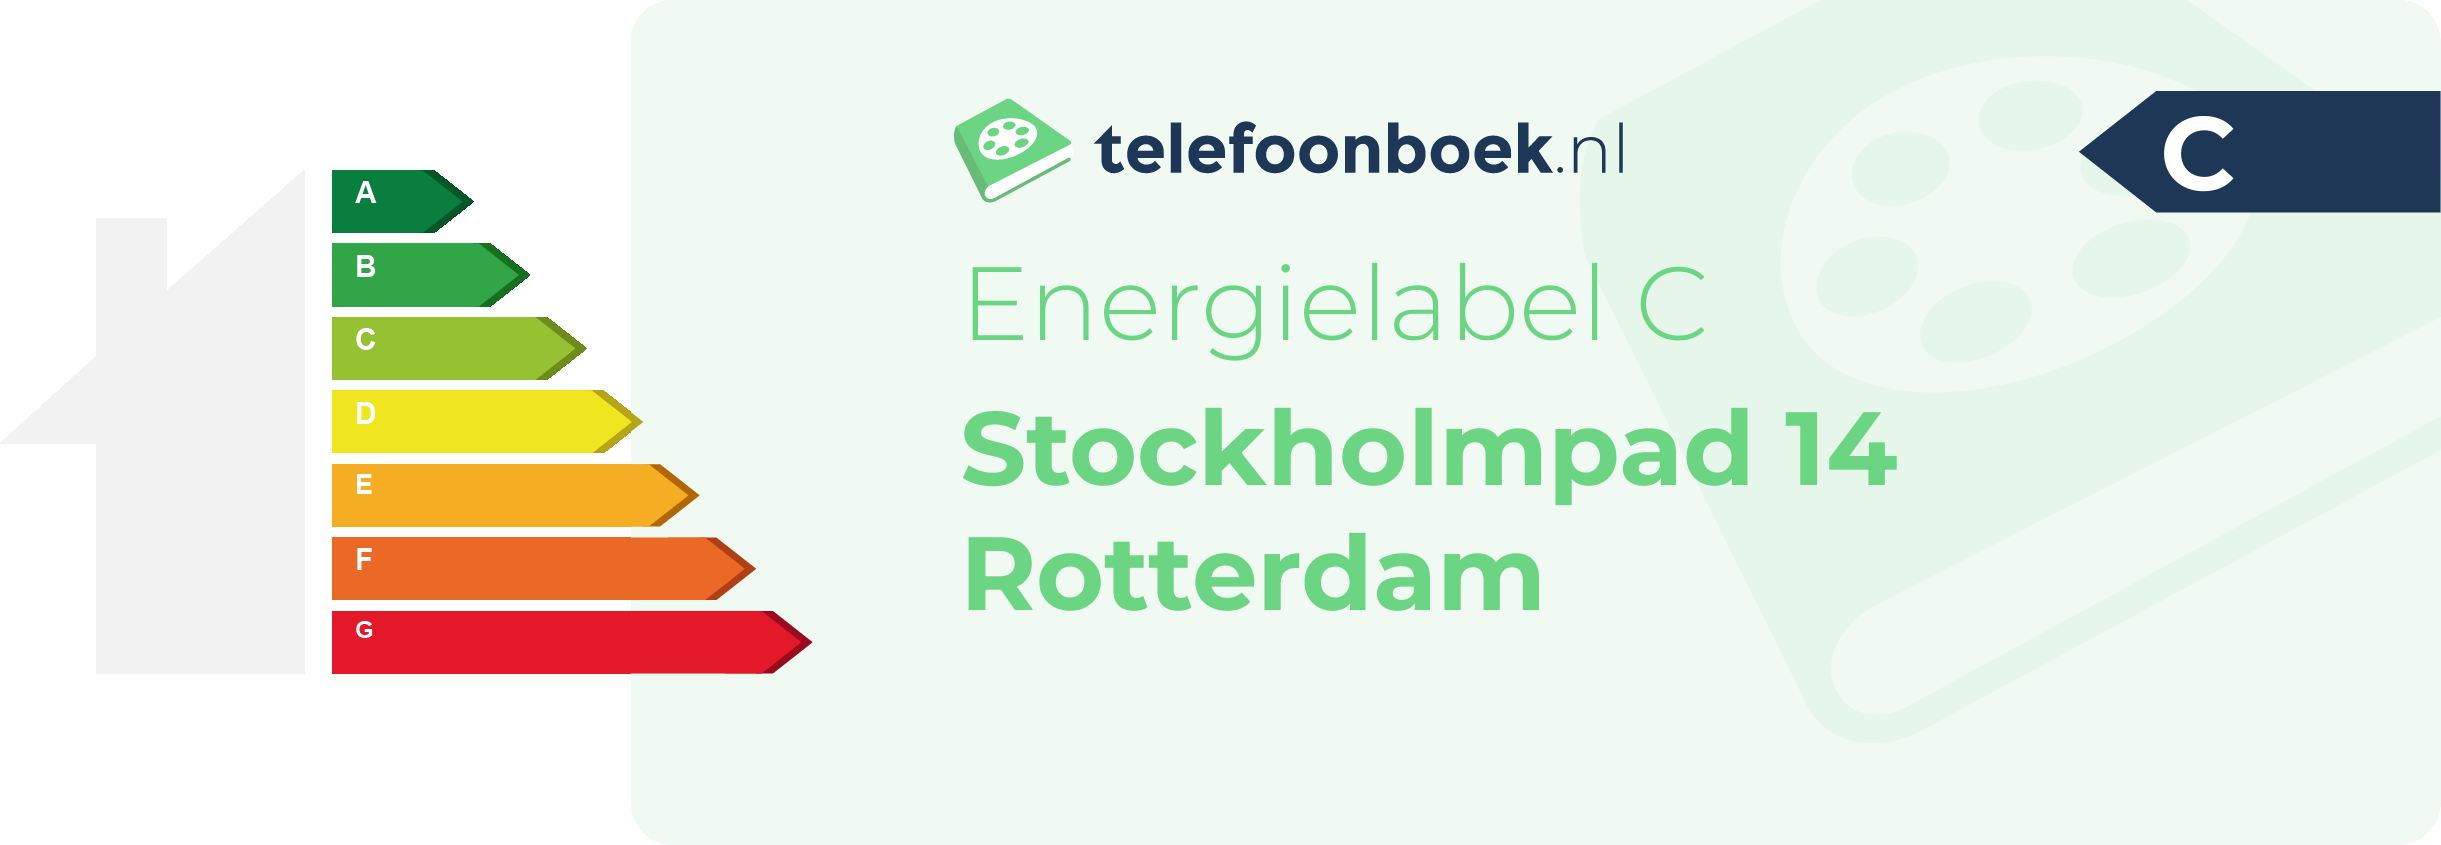 Energielabel Stockholmpad 14 Rotterdam